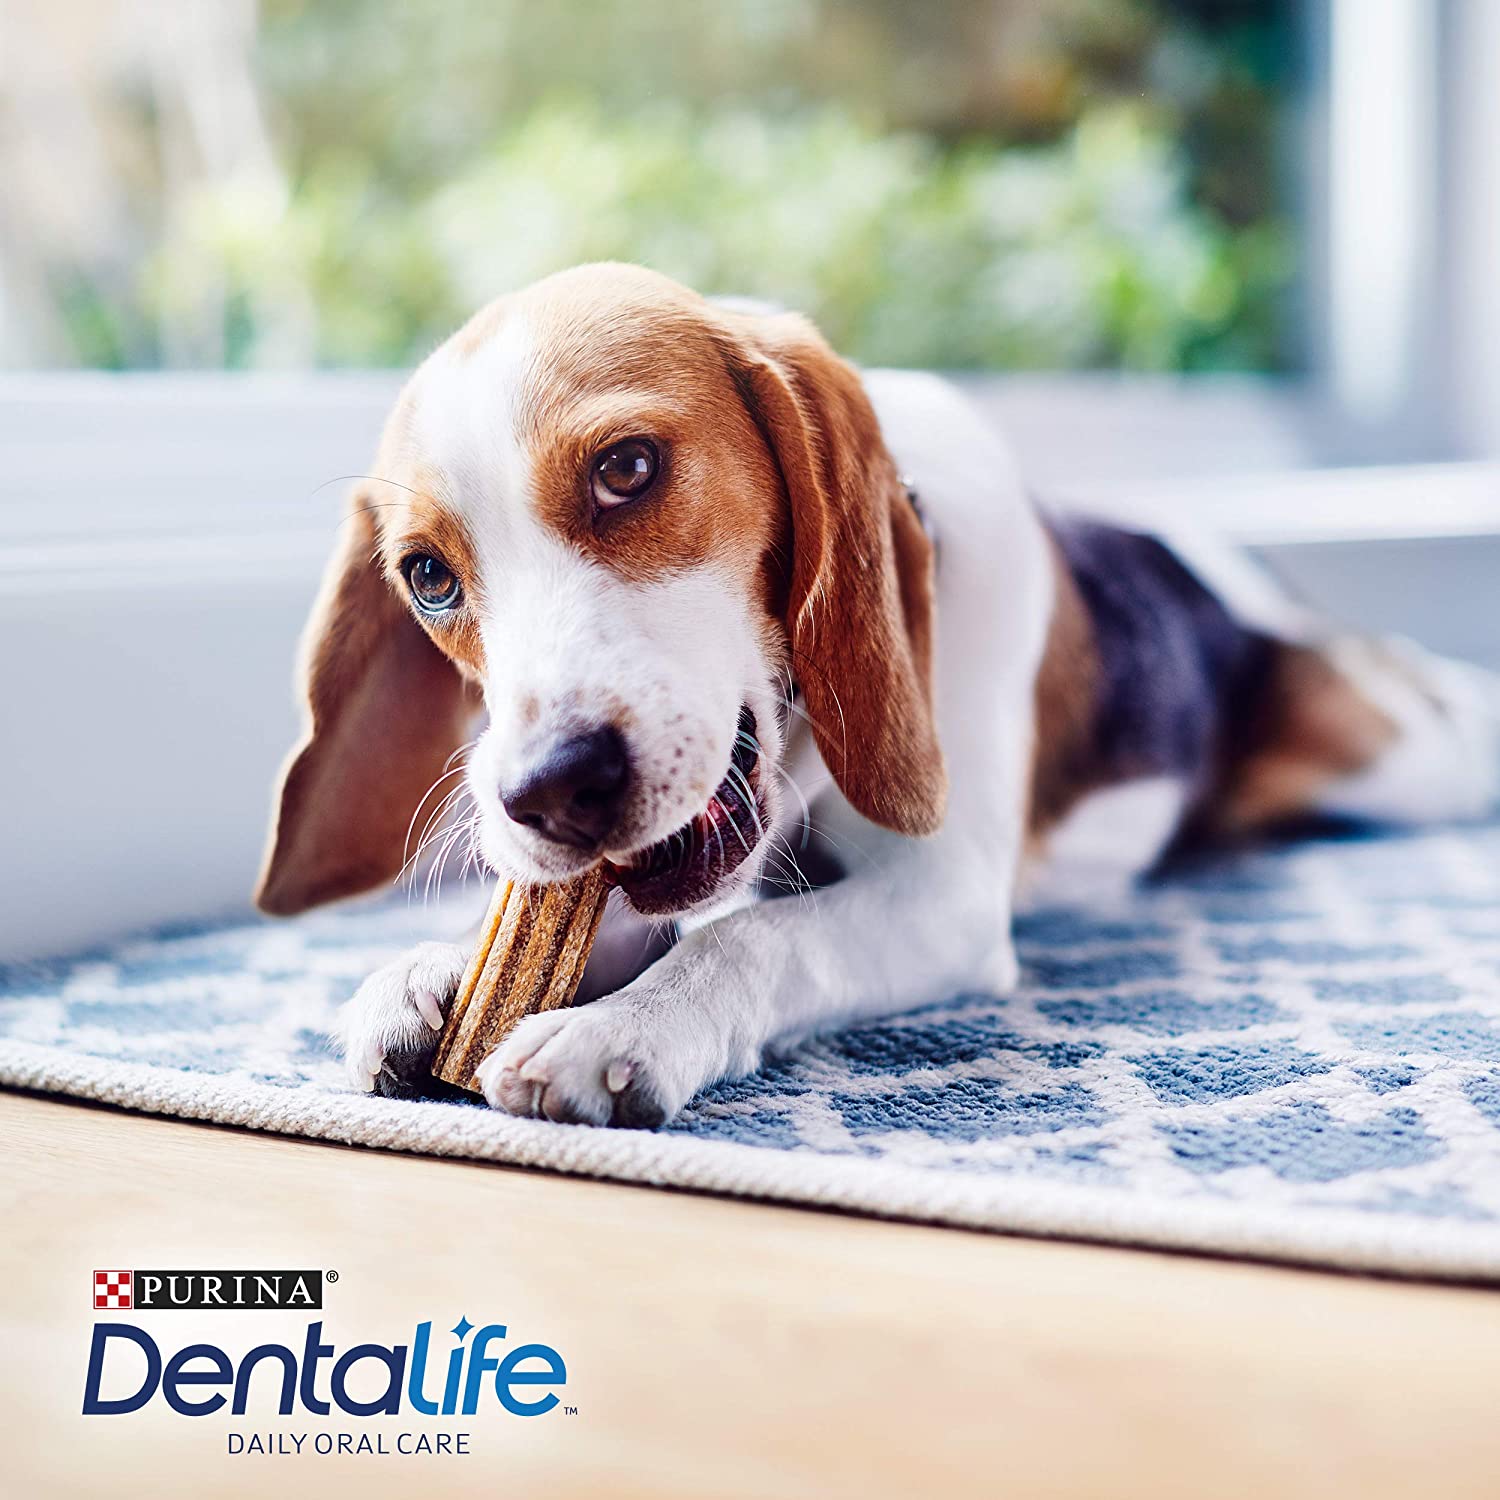  Purina DentaLife - Aperitivos de cuidado dental diario para perros, Pack of 4 x 350gr 